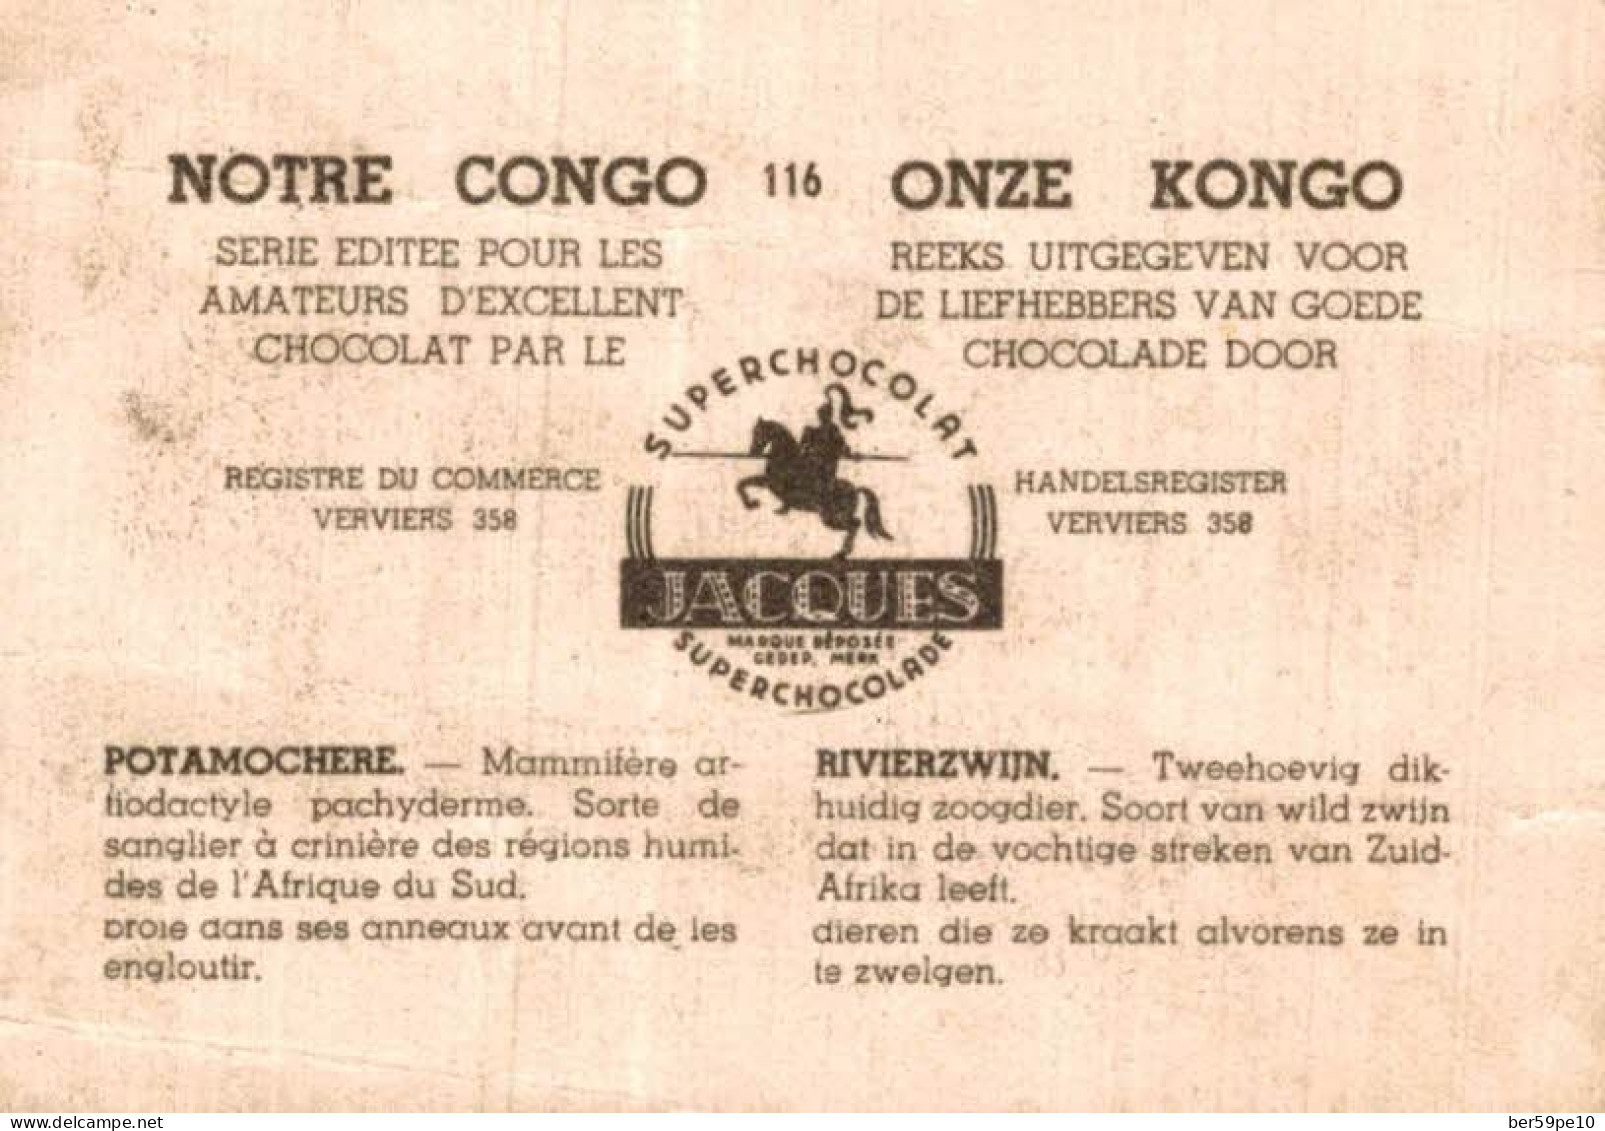 CHROMO SUPER CHOCOLAT JACQUES NOTRE CONGO N°116 PATAMOCHERE - Jacques